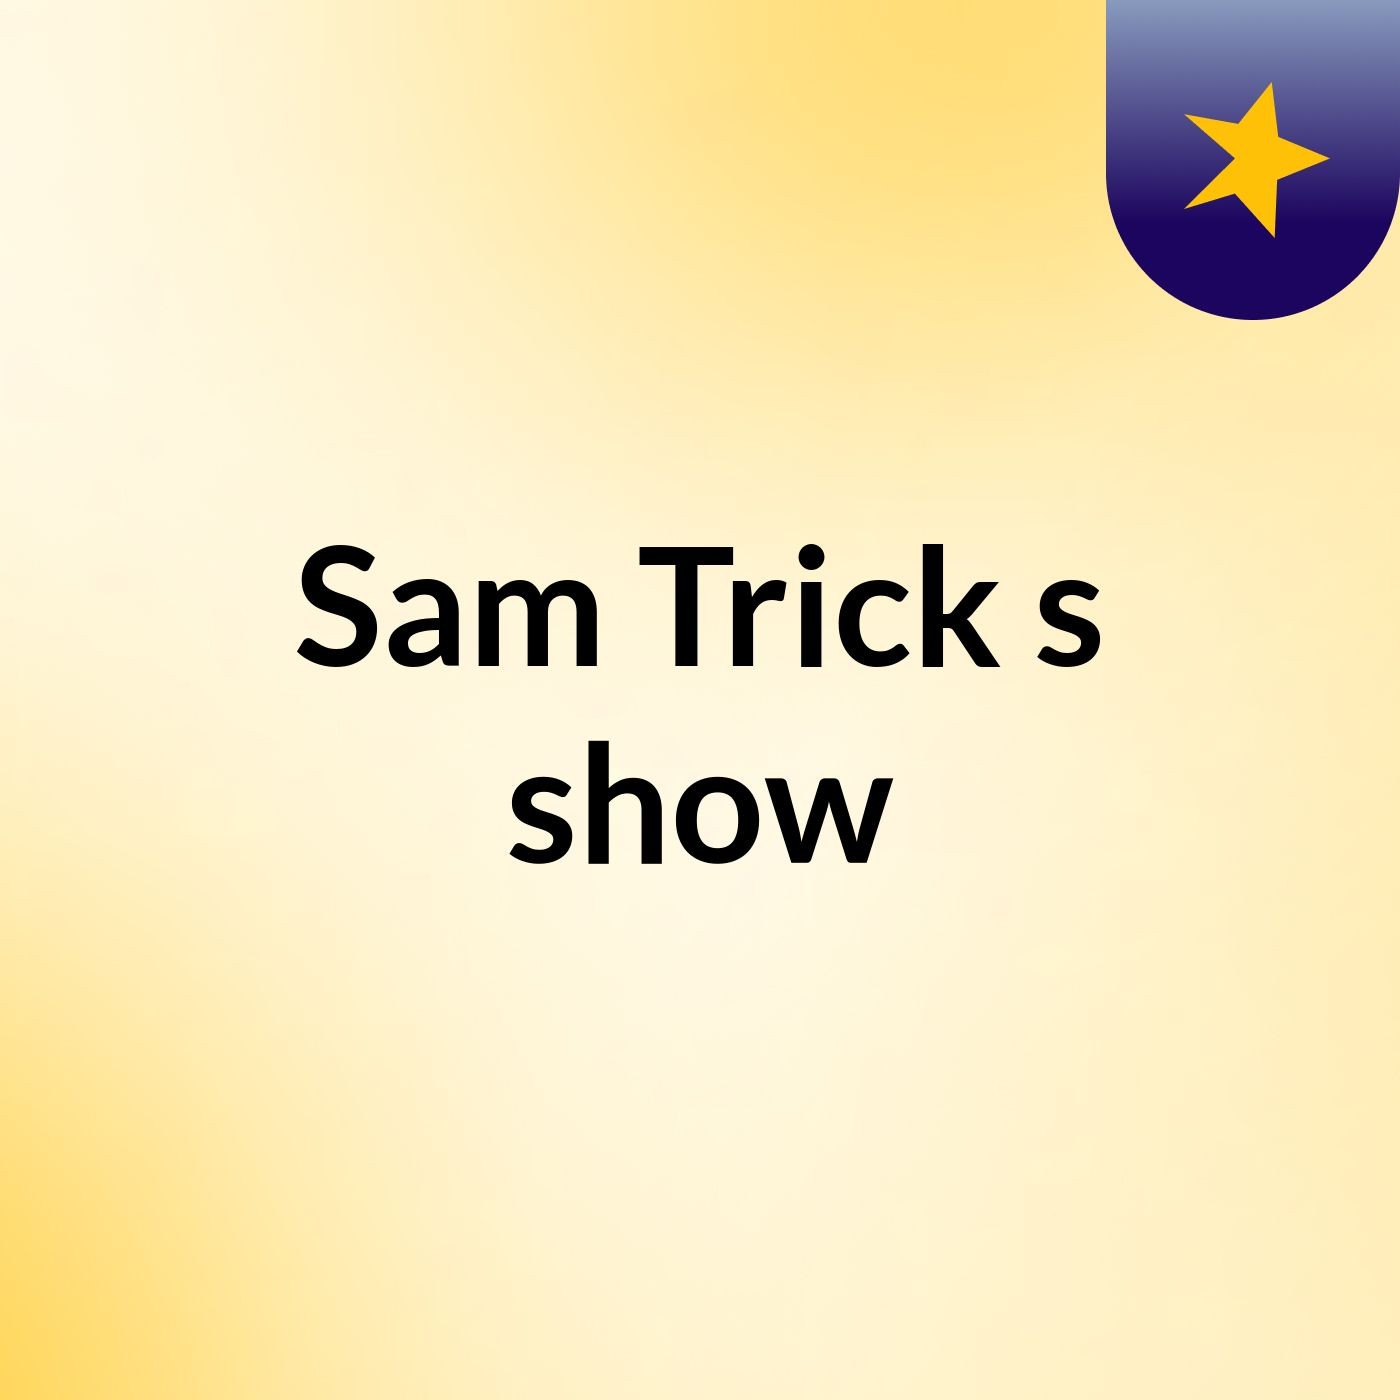 Sam Trick's show